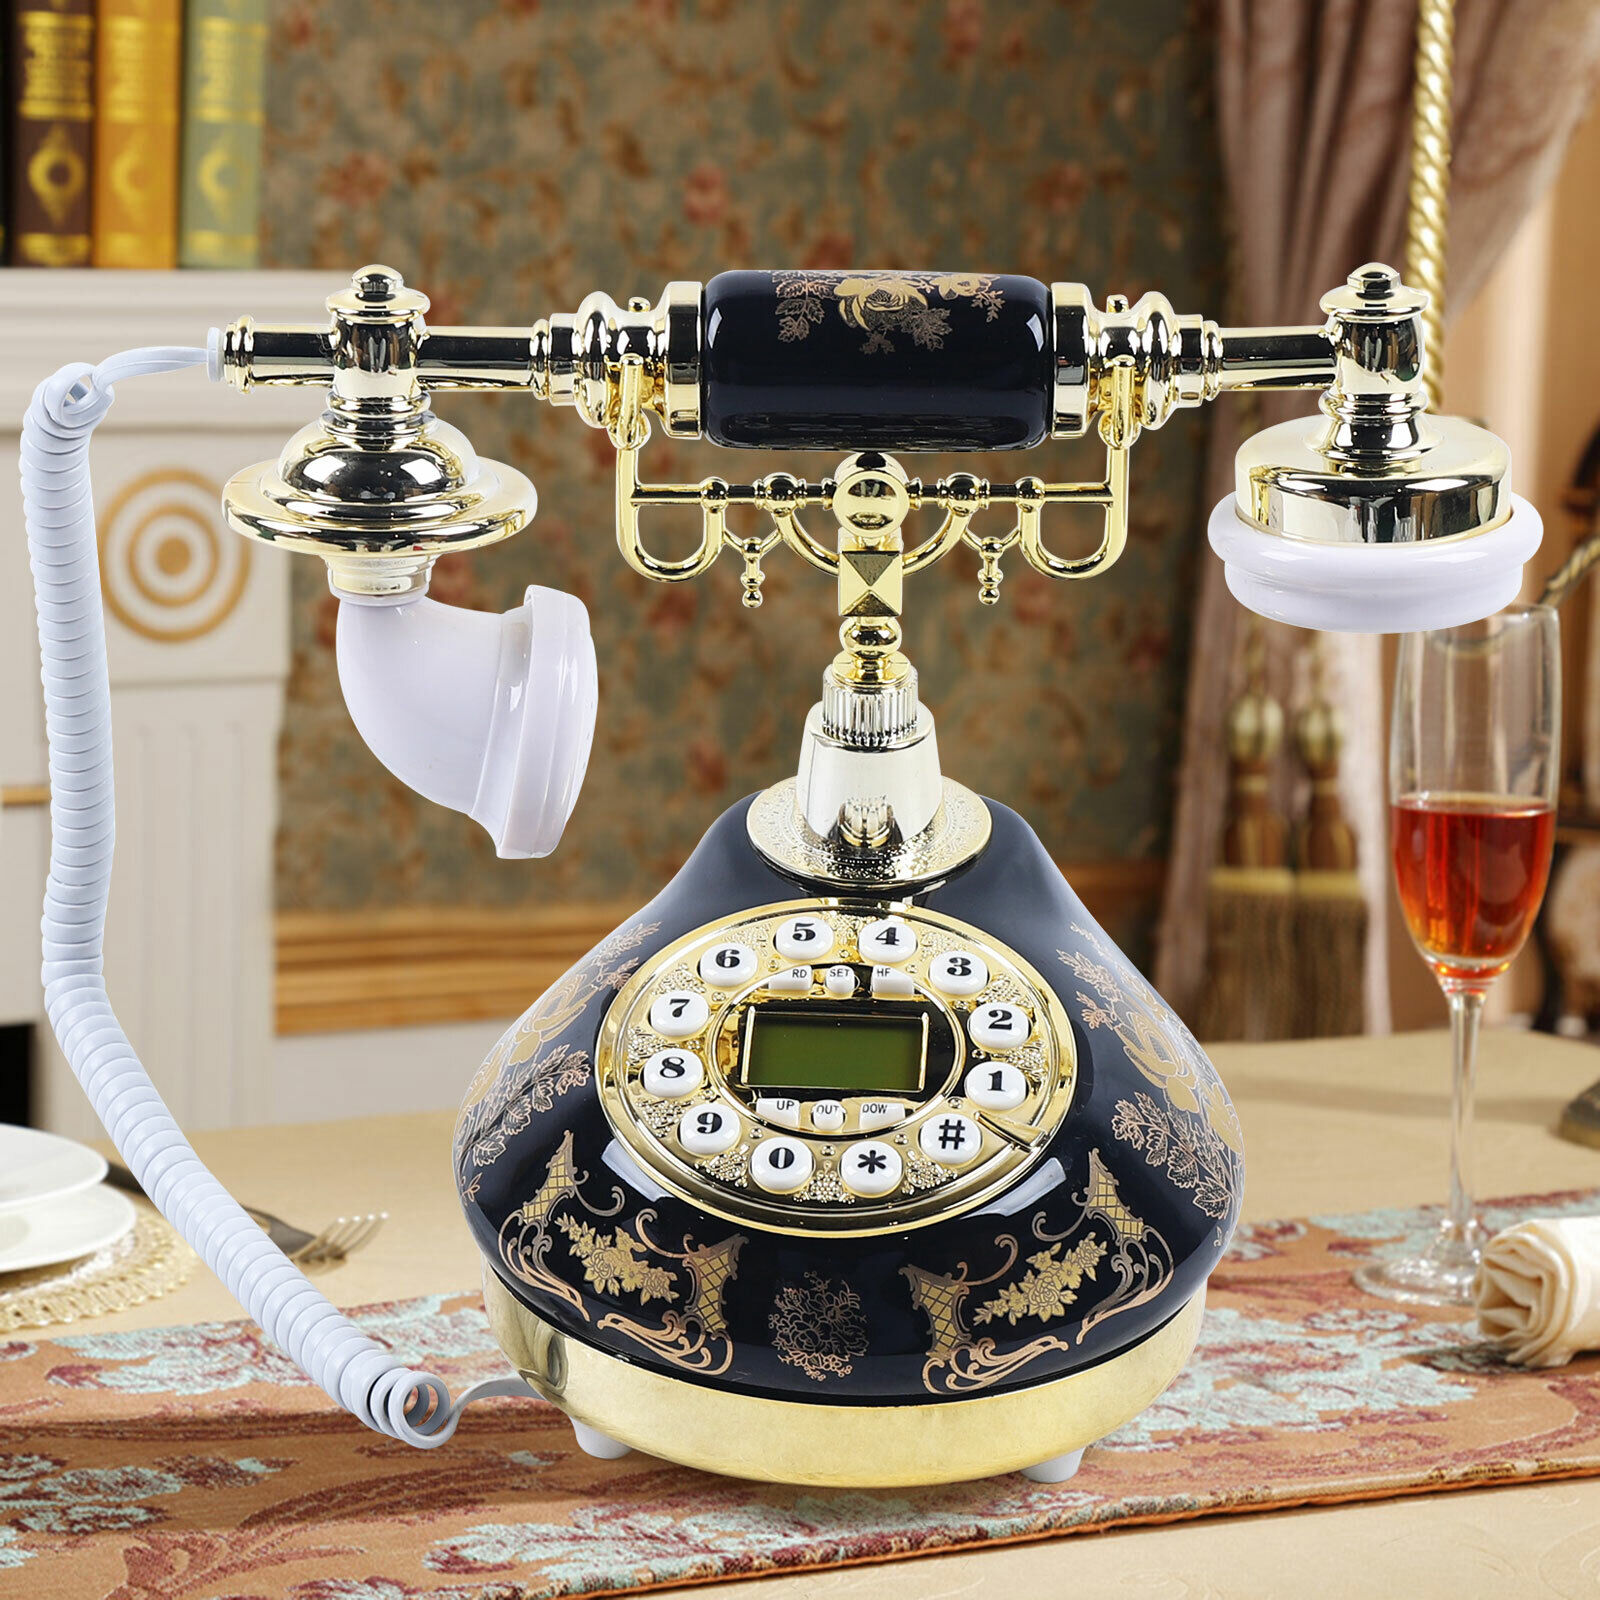 Antique Vintage Ceramic Telephone European Push Button Old Phone Landline Decor